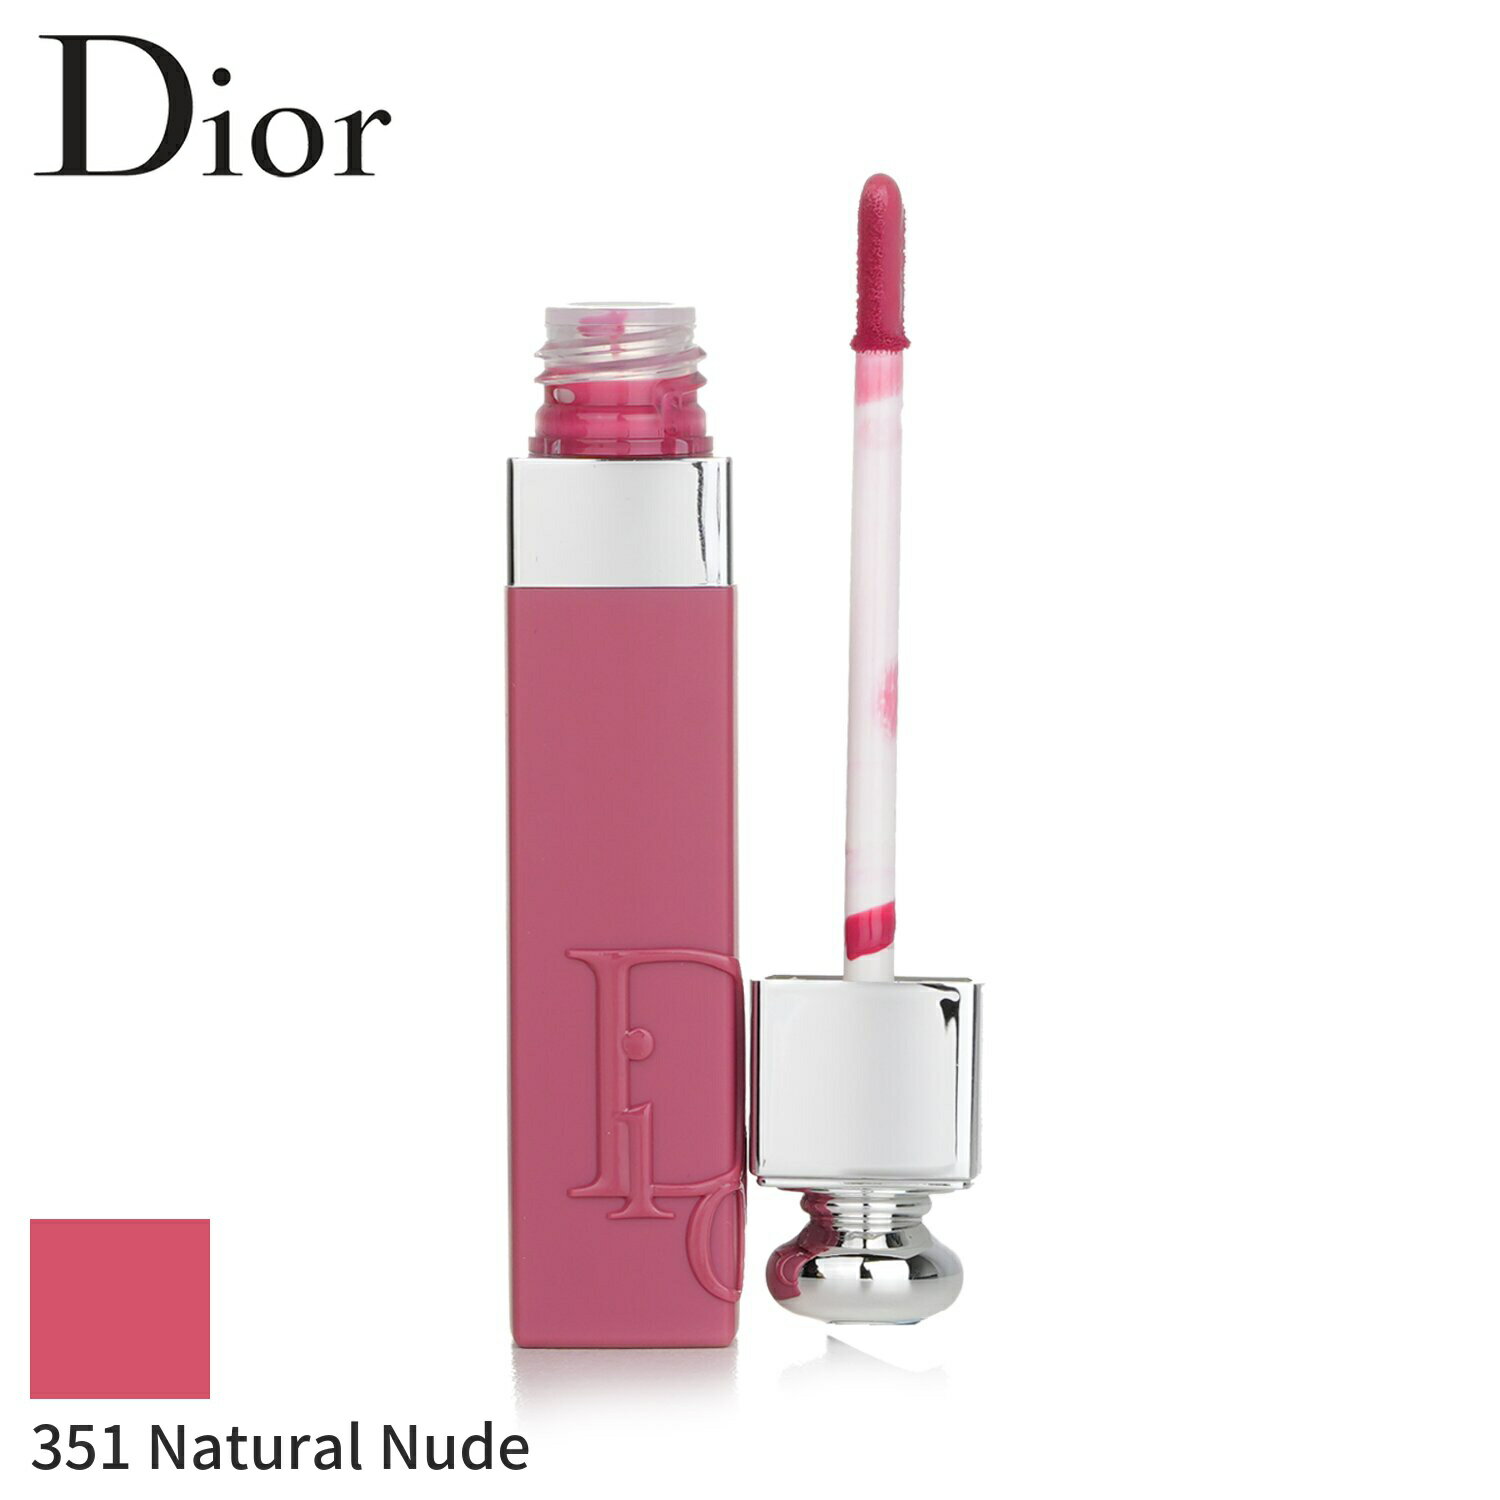 NX`fBI[ bvOX Christian Dior g Addict Lip Tint - # 351 Natural Nude 5ml CNAbv bv ɂ av[g Mtg lC uh RX